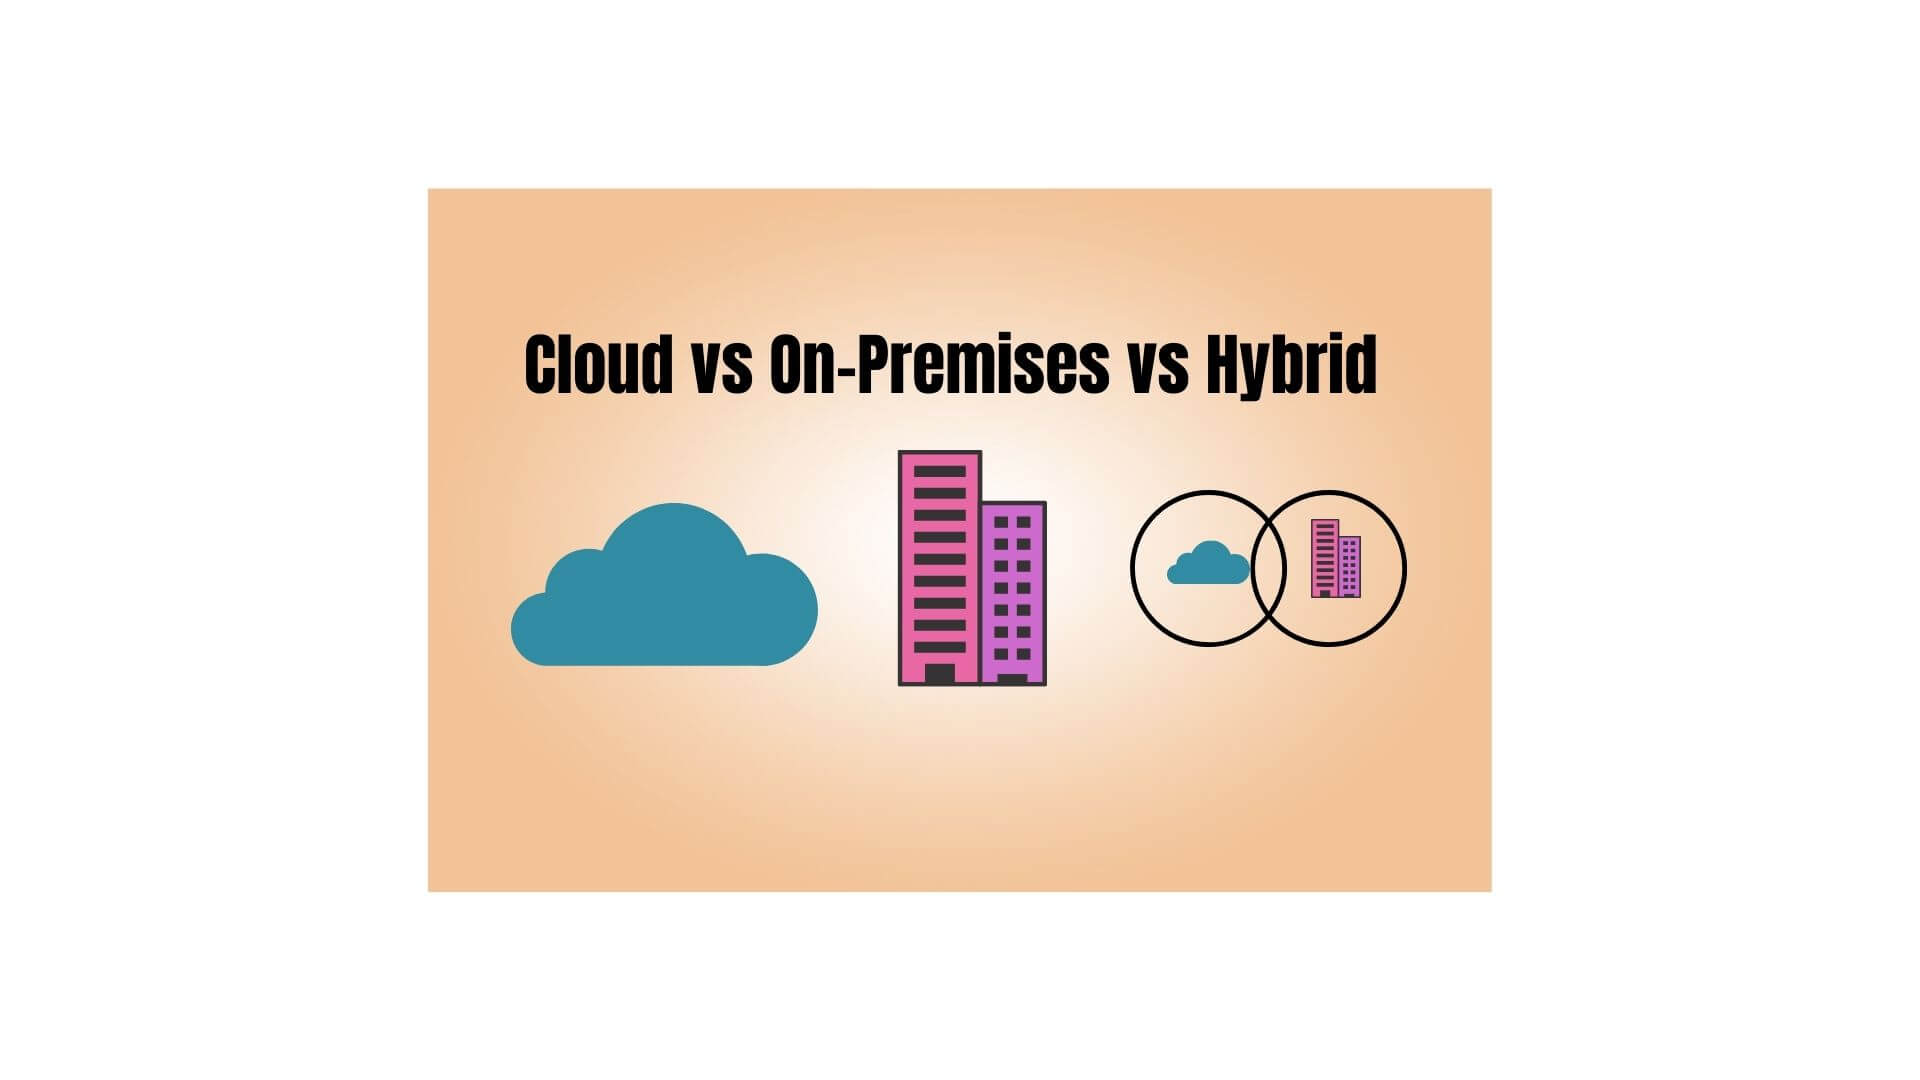 Cloud vs On-Premises vs Hybrid